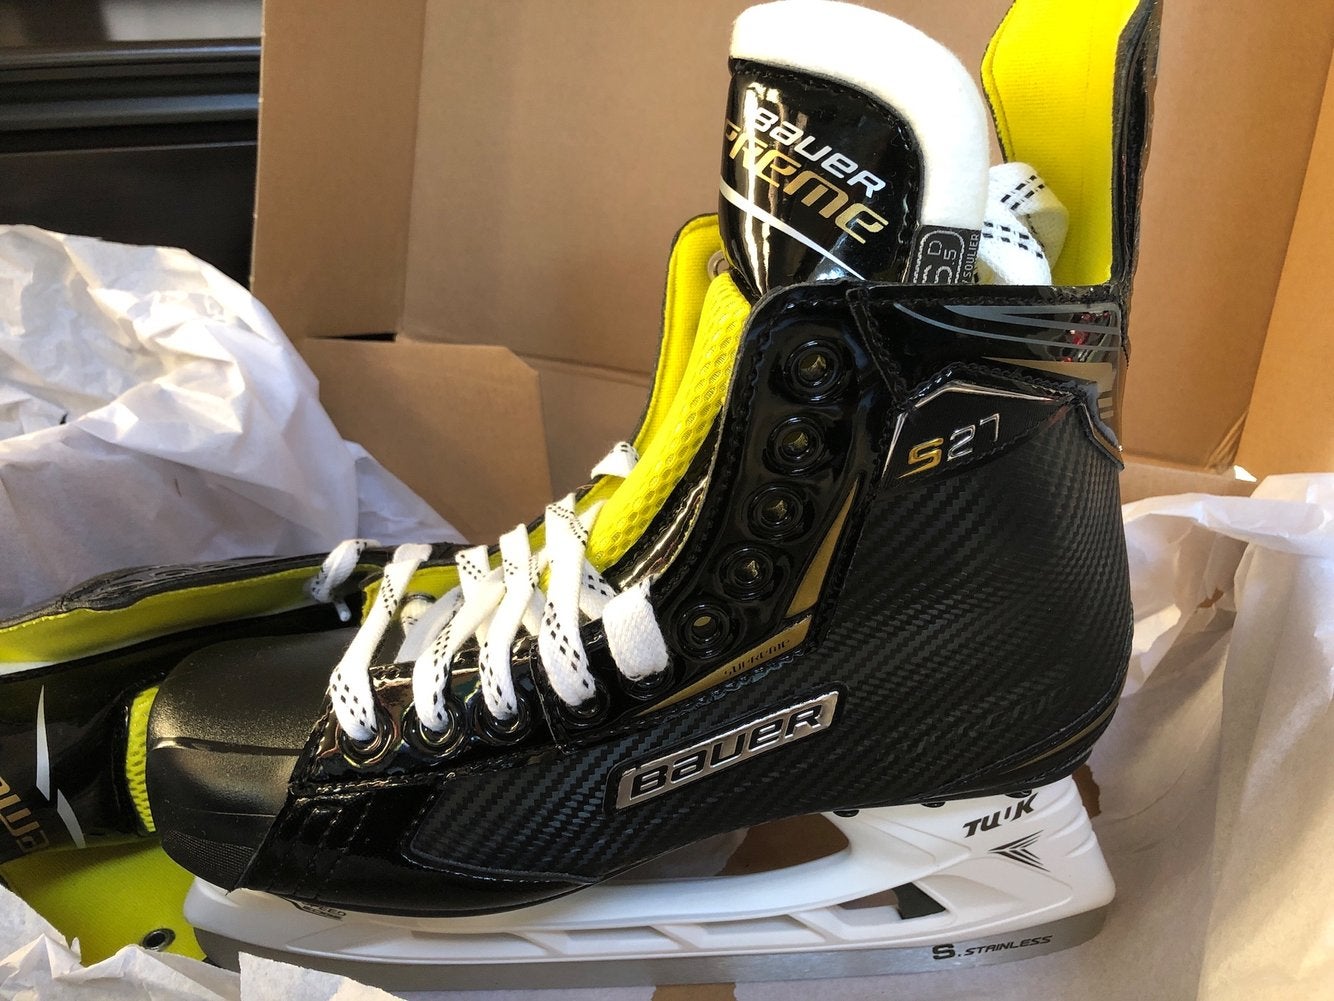 Bauer Supreme S27 Ice Hockey Skates Senior Size *NEW IN BOX* 